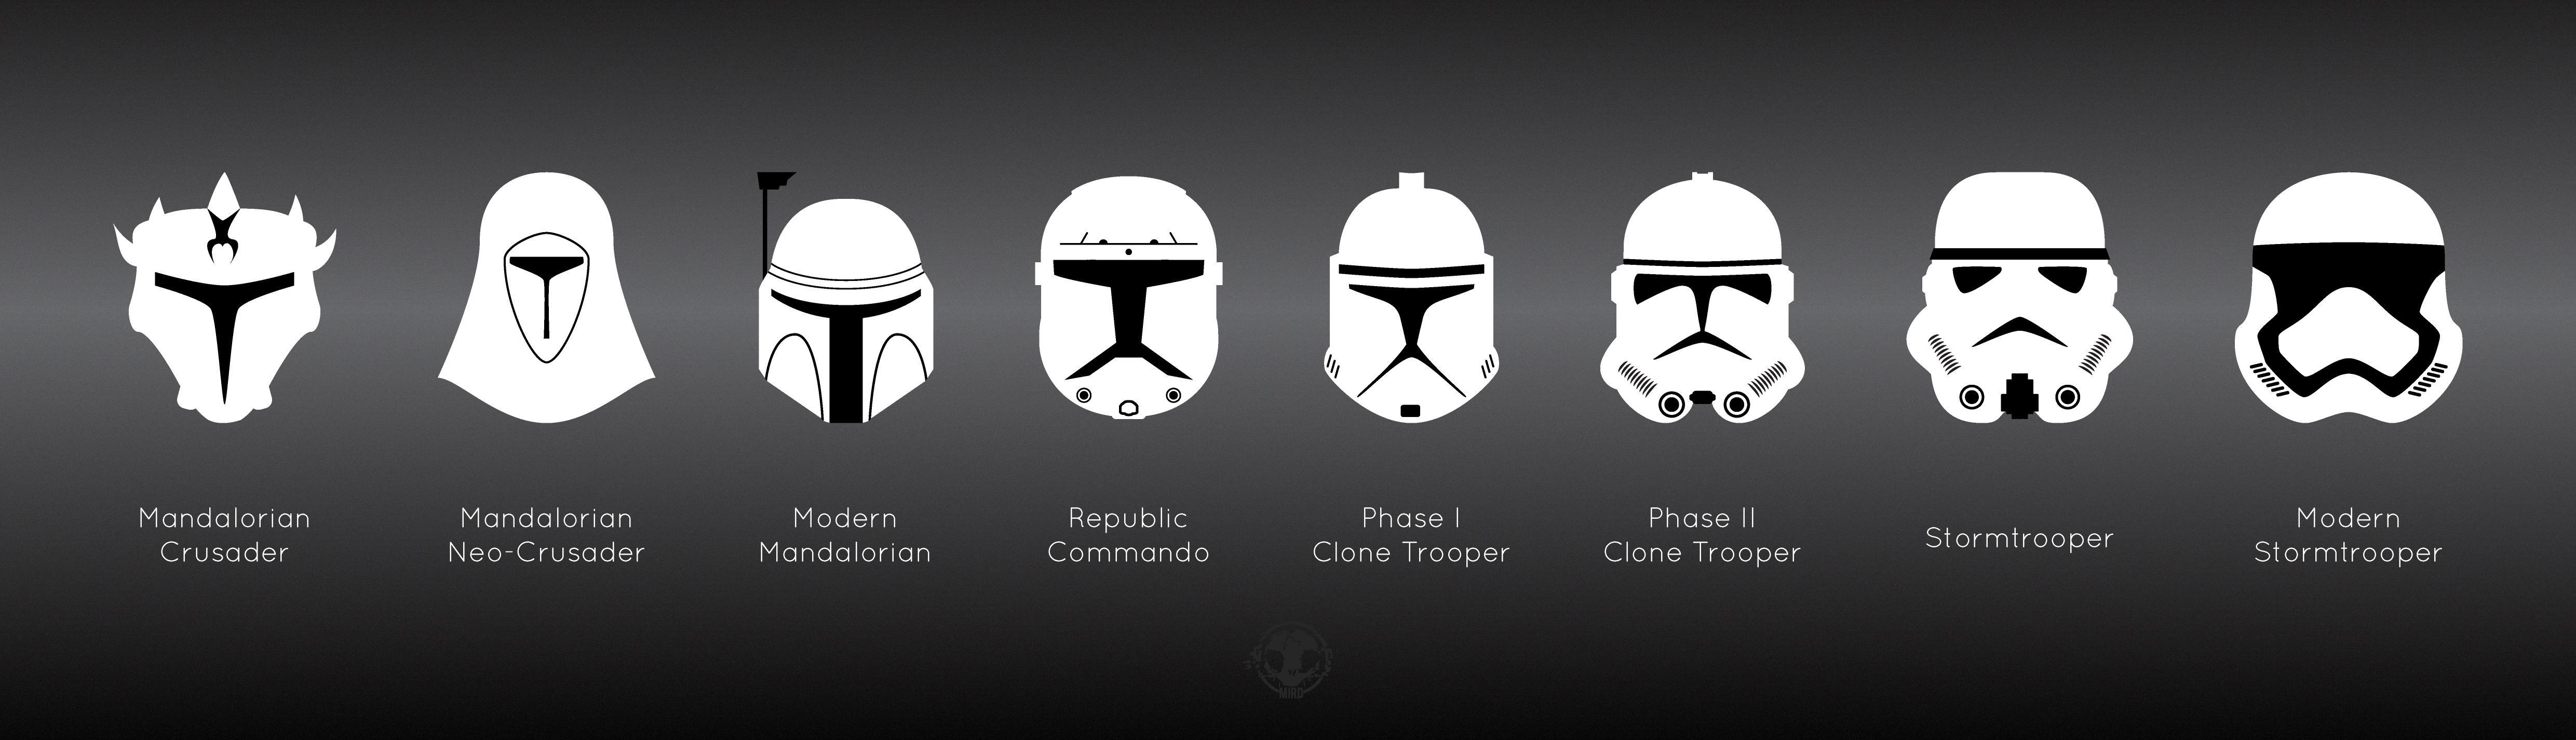 I love the evolution of the trooper helmet design, so I made a